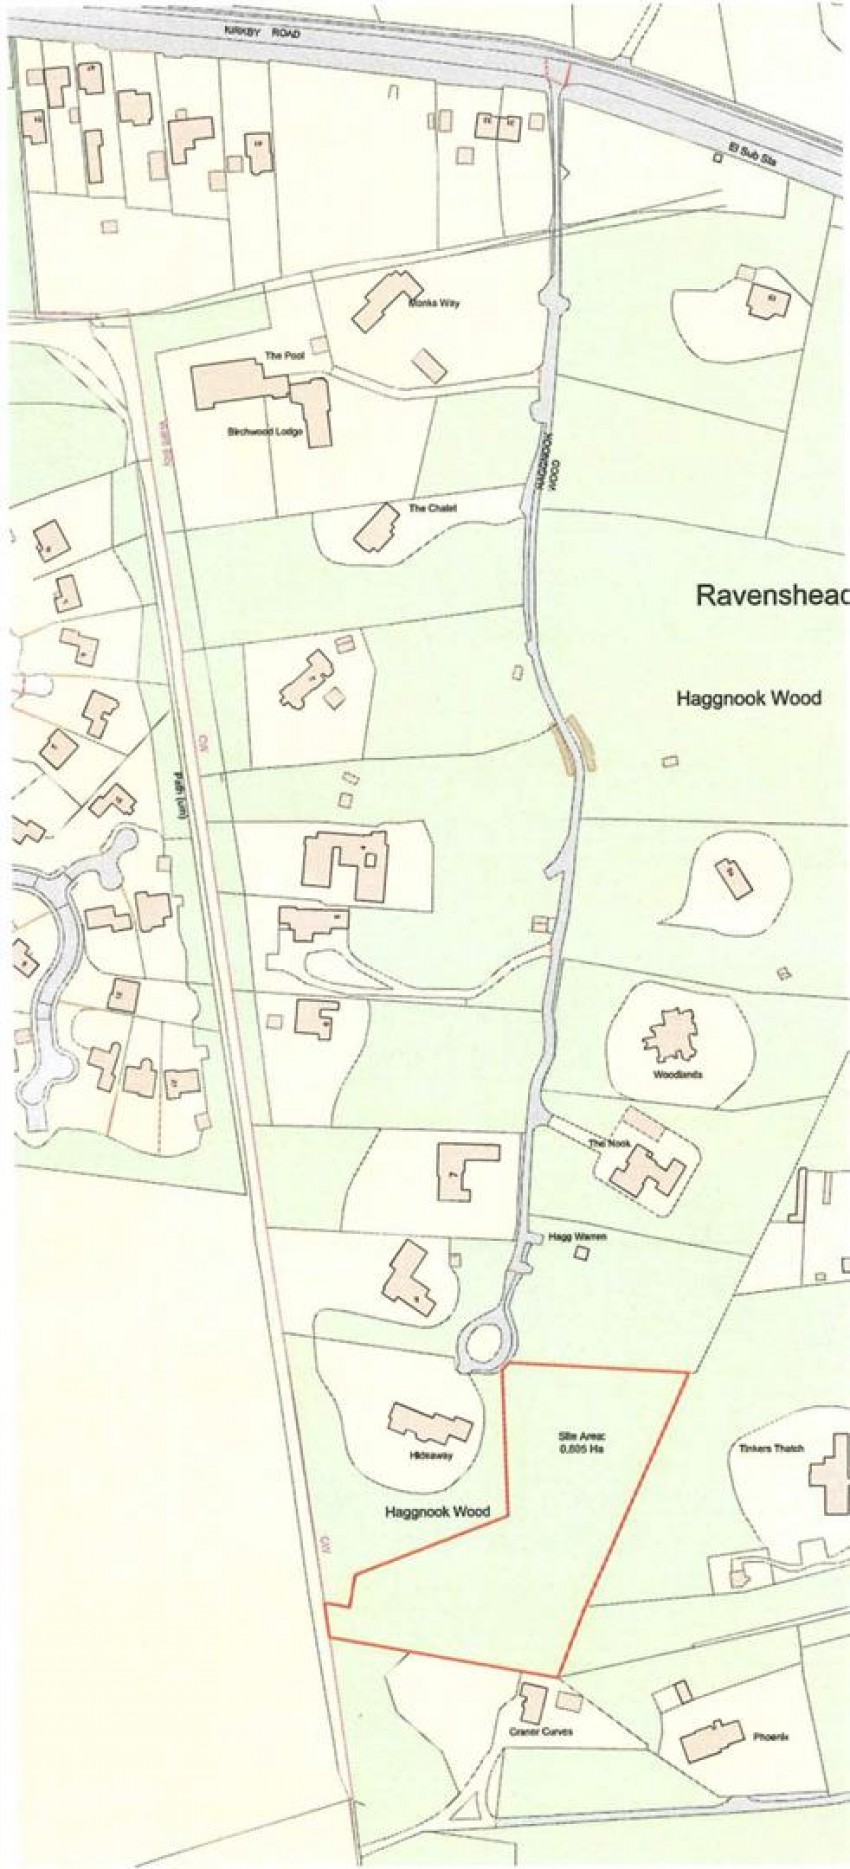 Images for Land at Haggnook Wood, Ravenshead, Nottingham